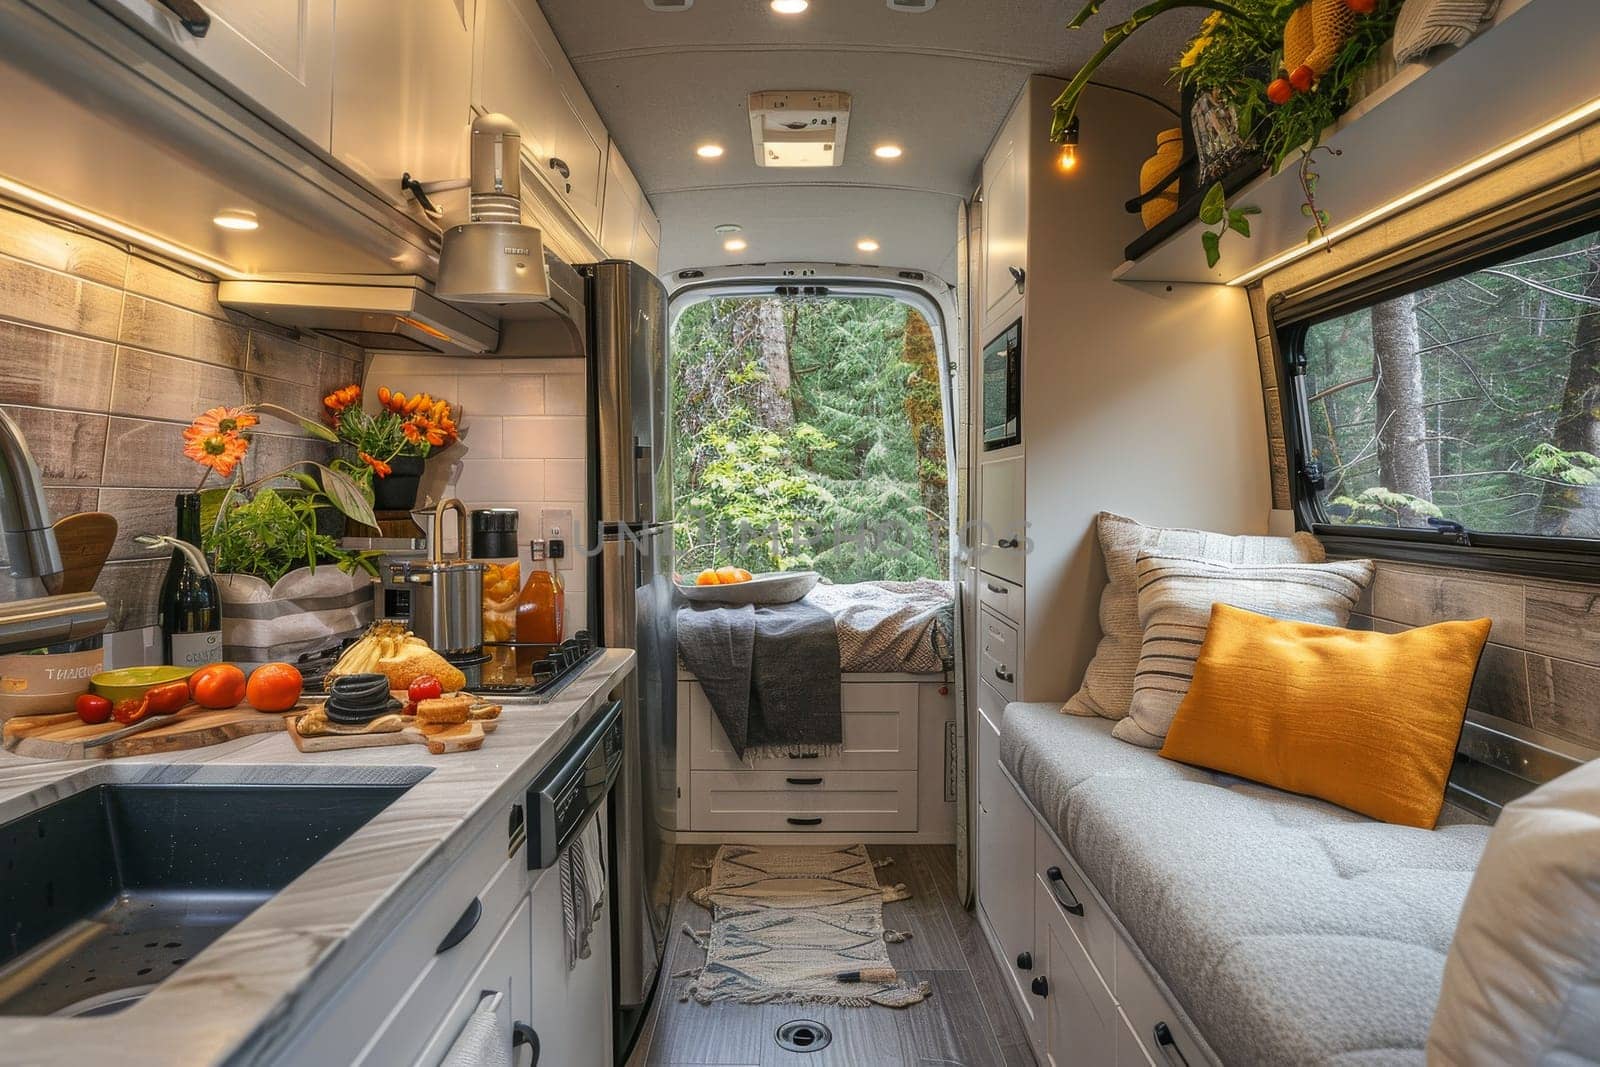 Kitchen inside a modern camper van. interior design by itchaznong